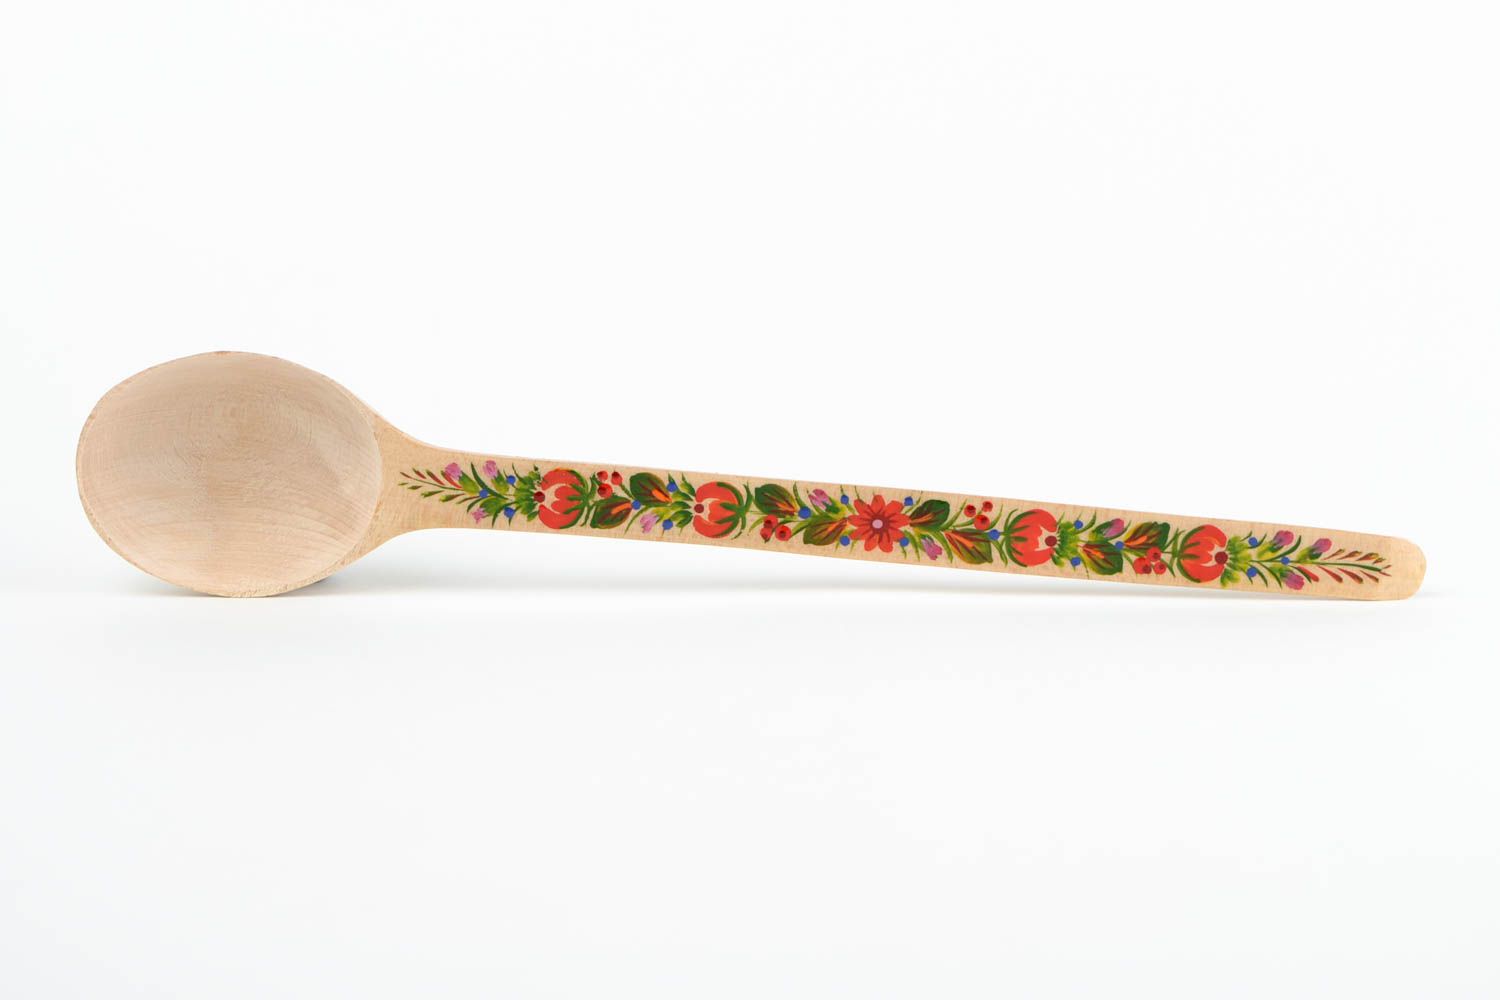 Handmade spoon designer spoon for kitchen decor ideas wooden spoon gift ideas photo 4